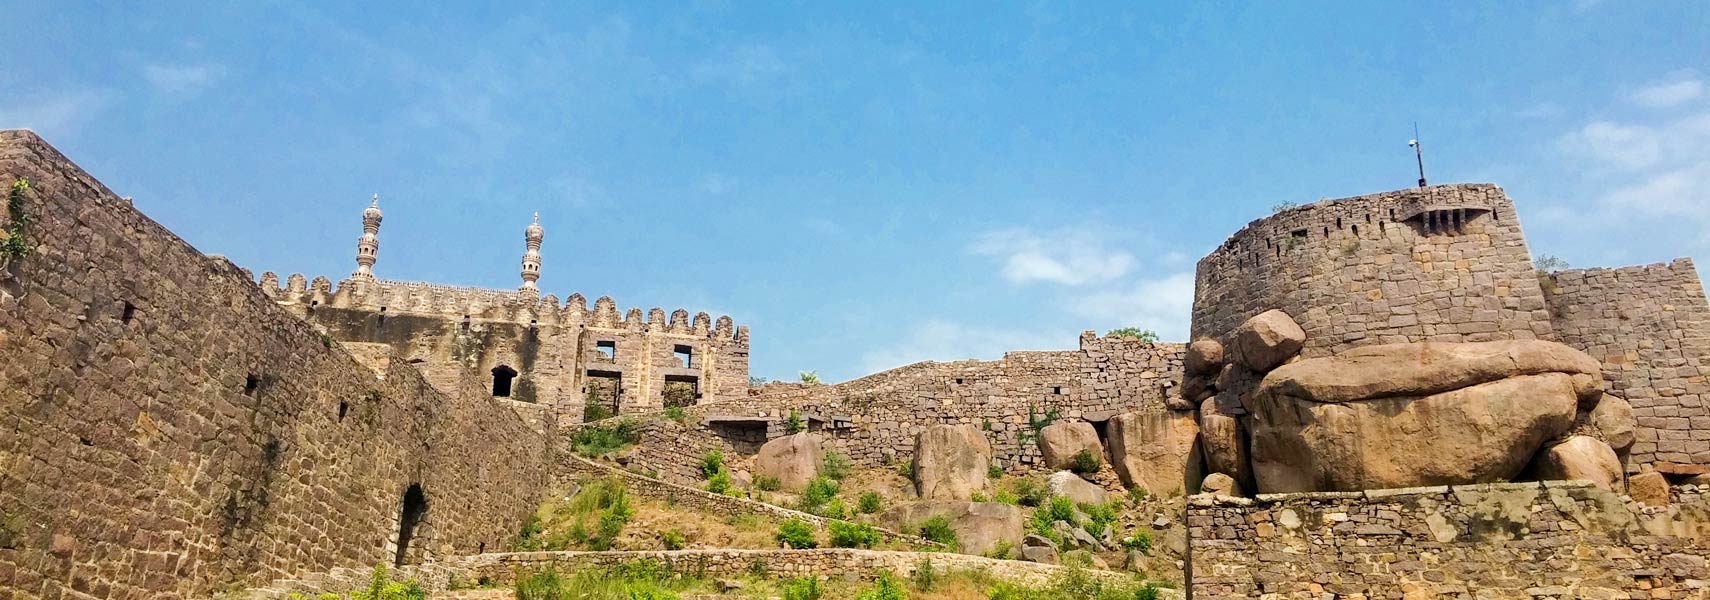 Golconda Fort near Hyderabad, Telangana